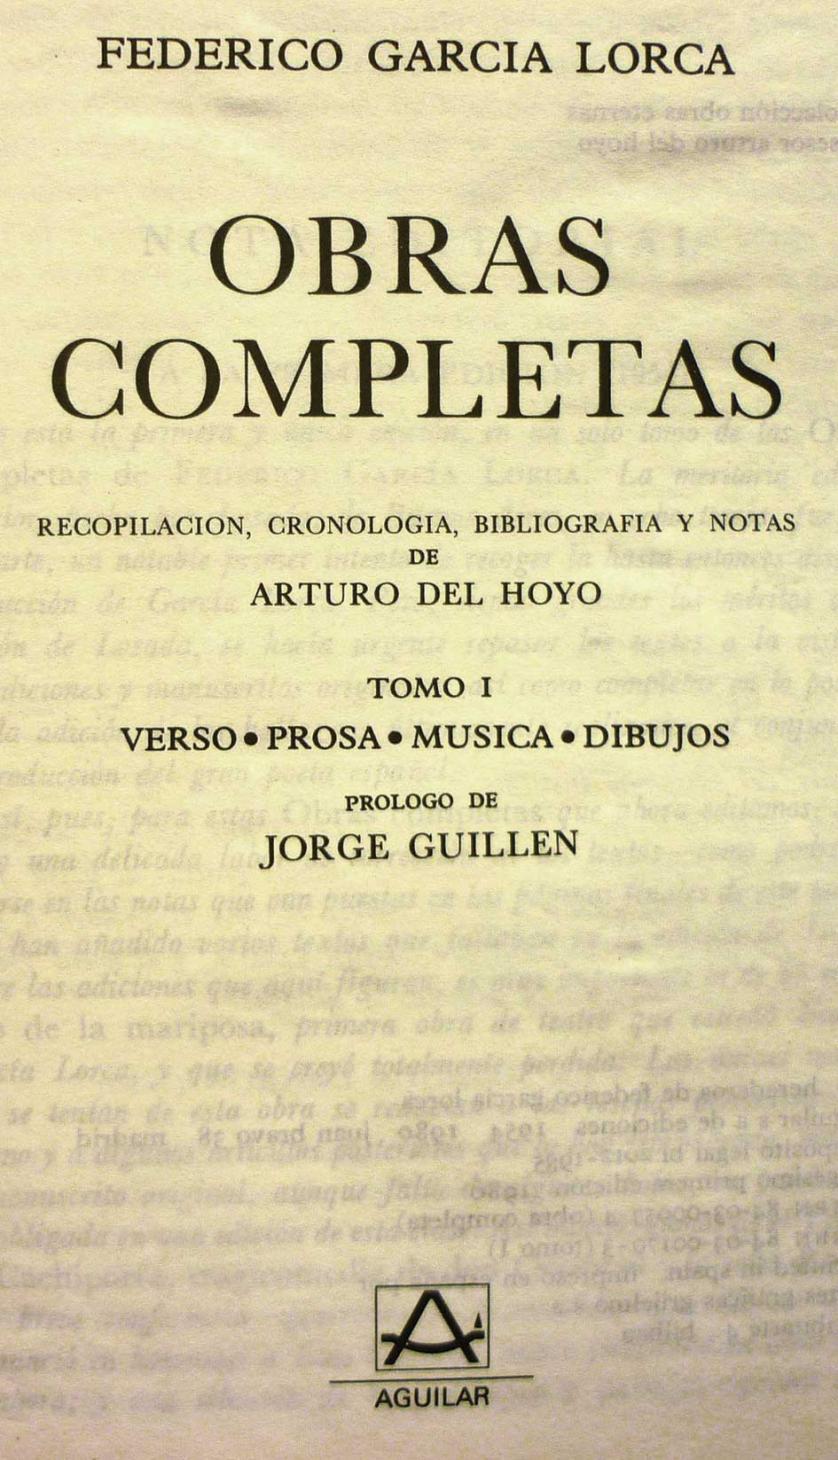 Garcia Lorca. Complete works. aguilar